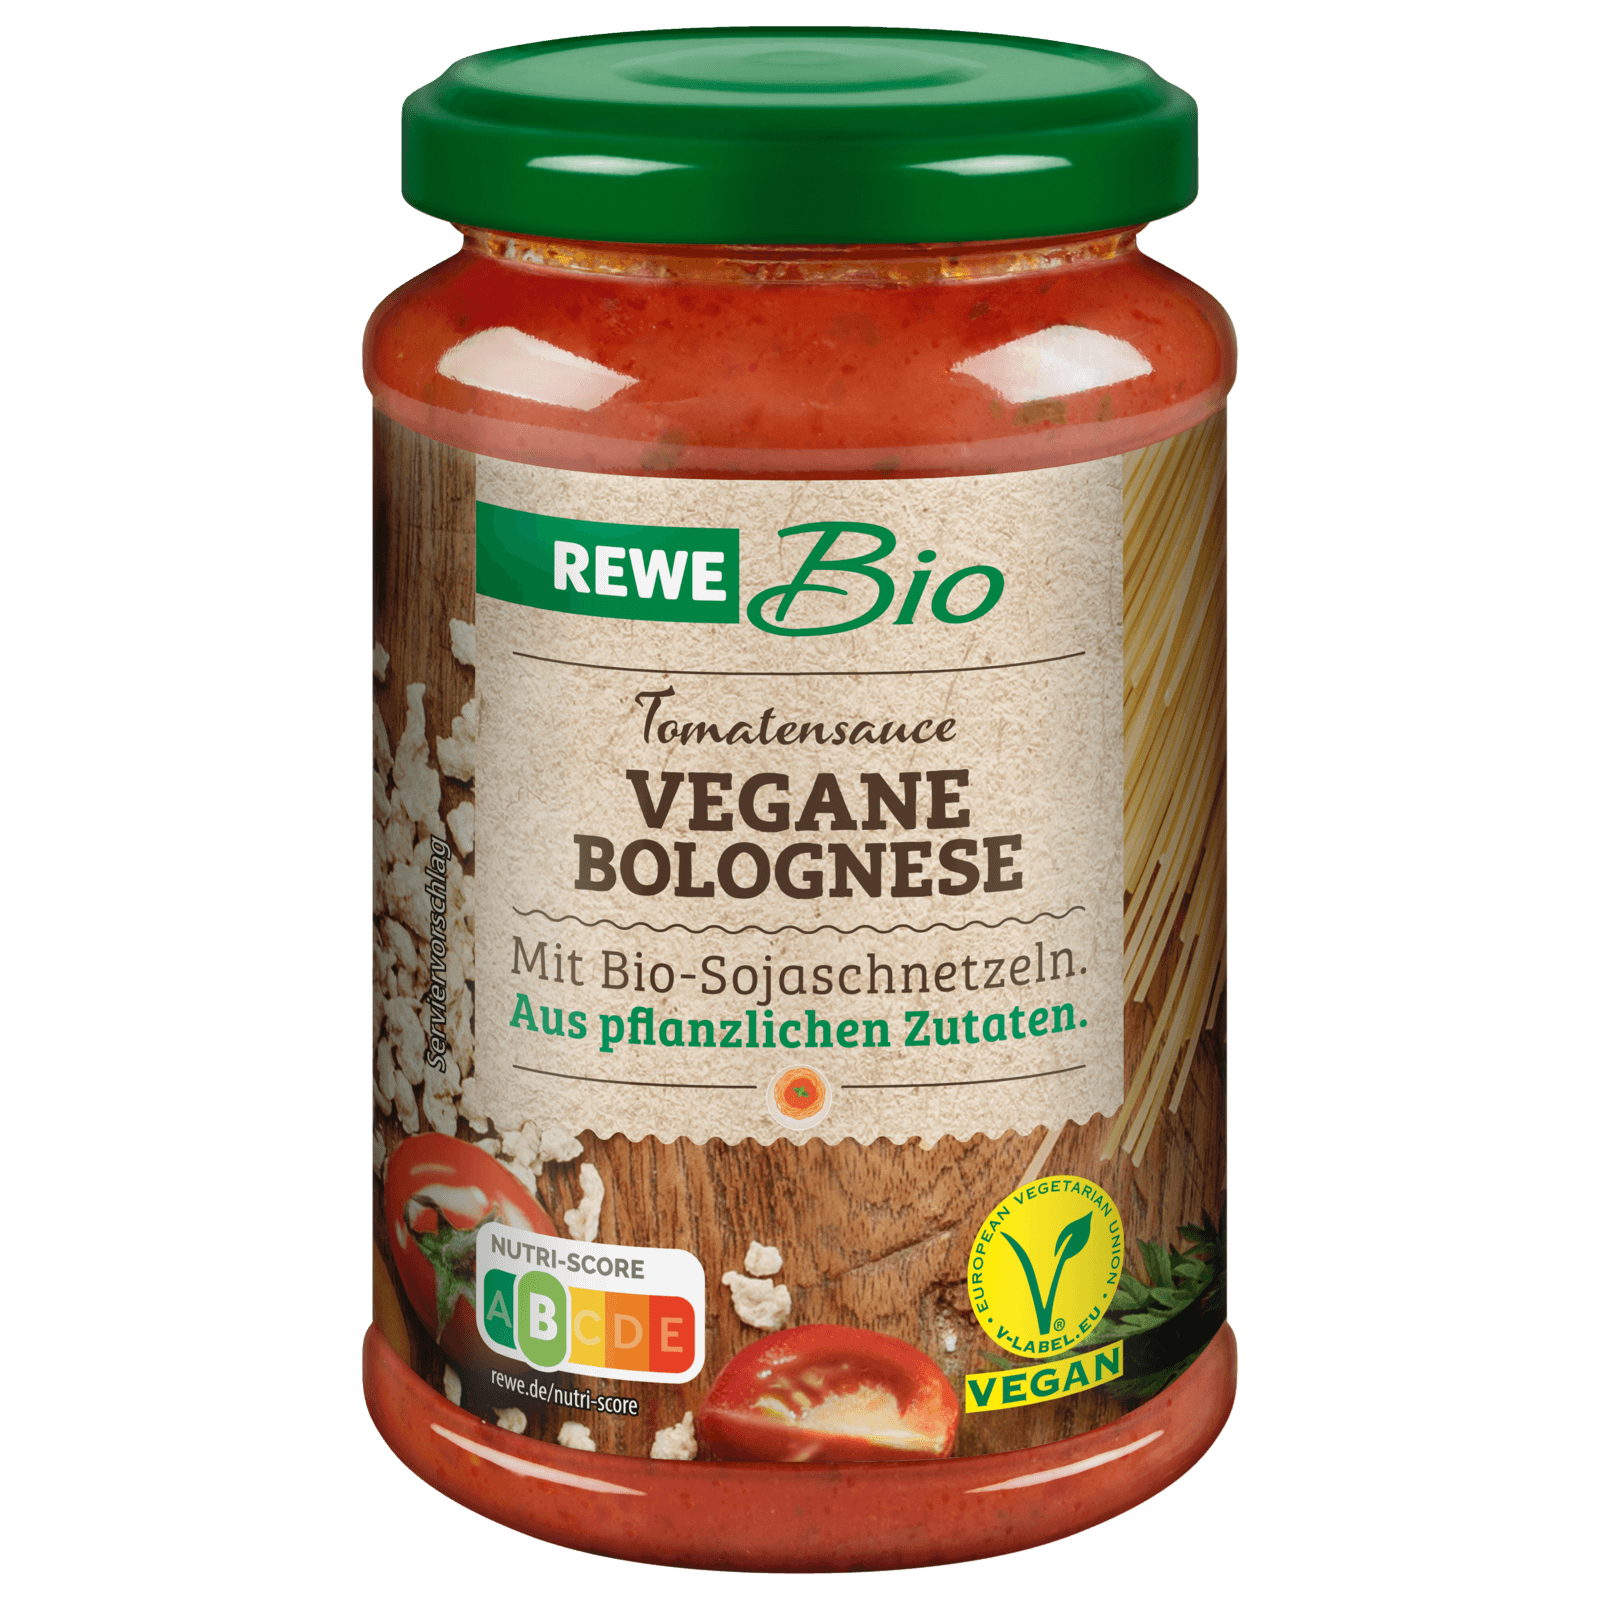 REWE Bio Vegane Bolognese 350g